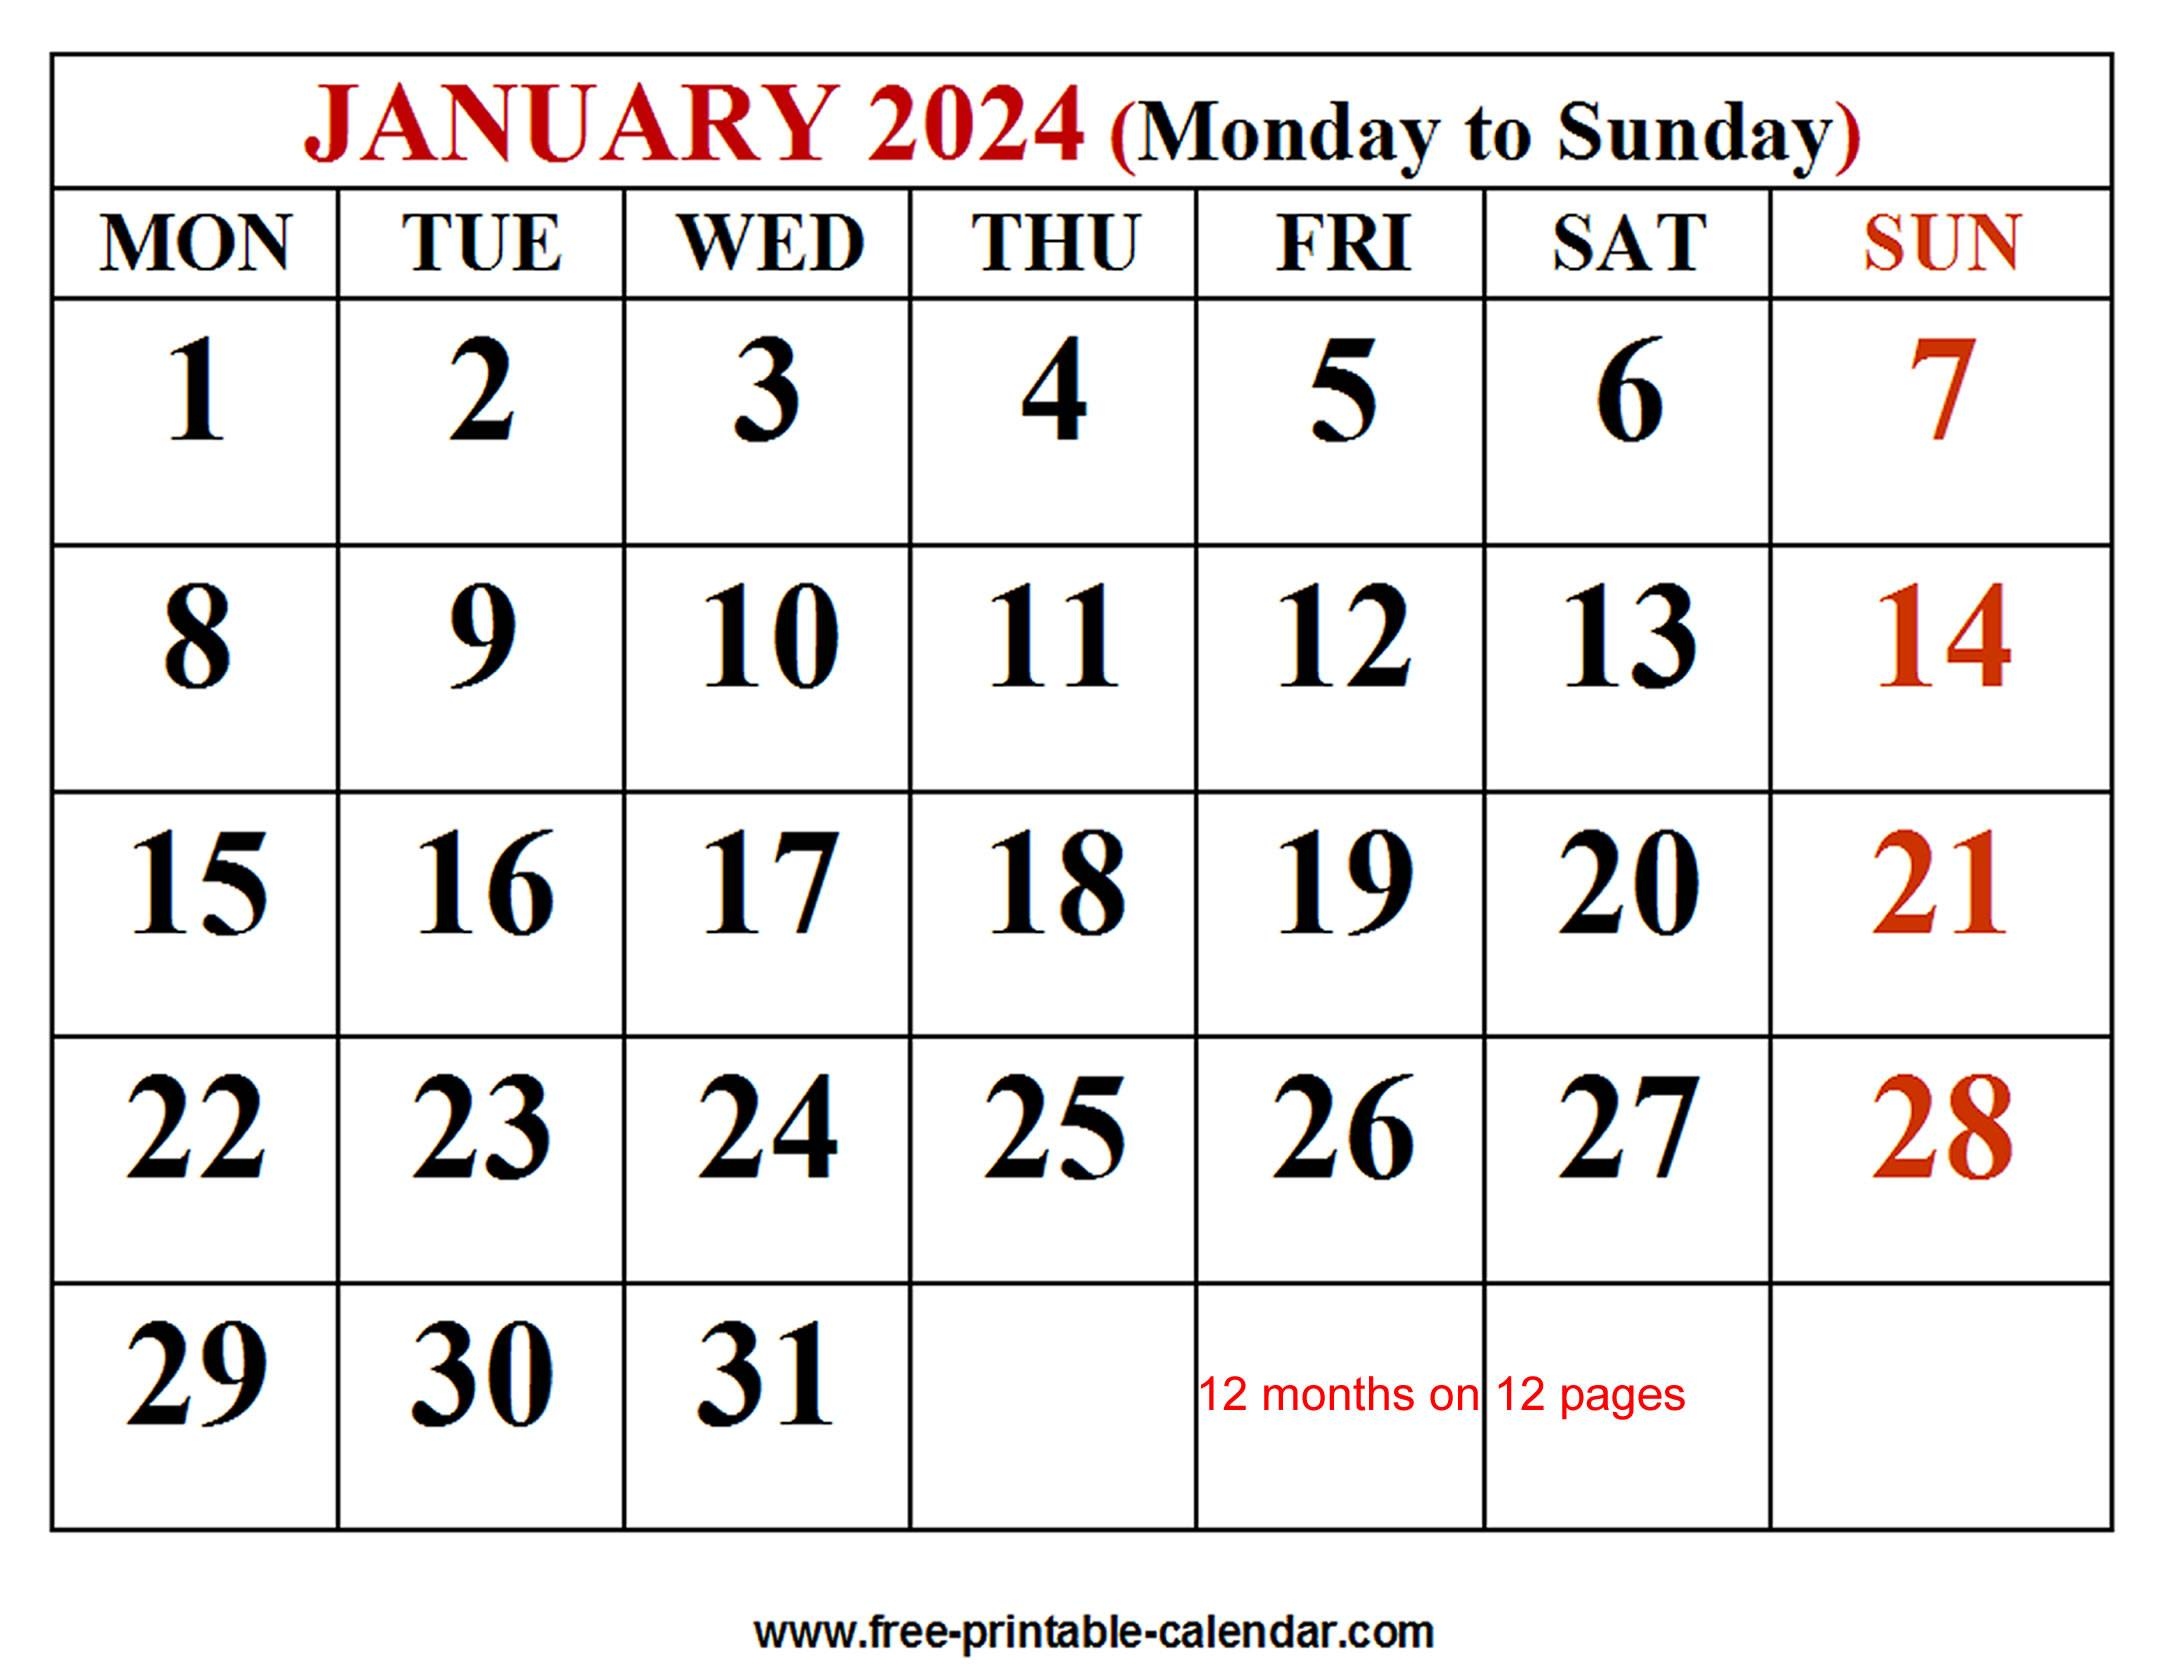 2024 Calendar Template - Free-Printable-Calendar regarding Free Printable Calendar 2024 Template